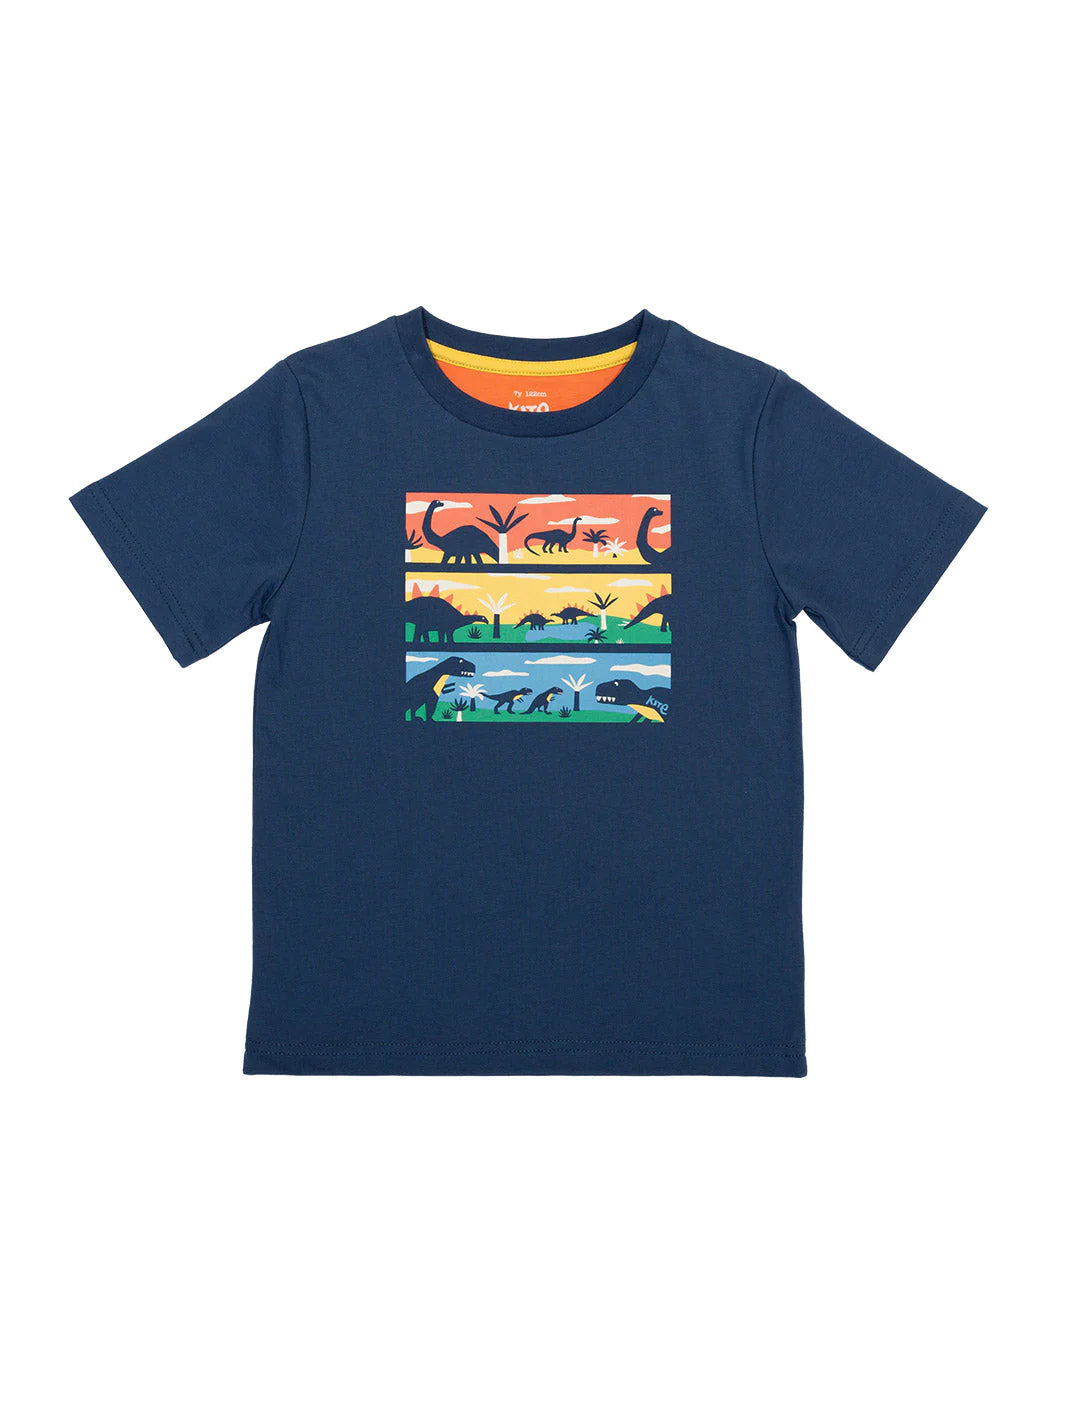 Kite Mesozoic Era T-Shirt - Navy